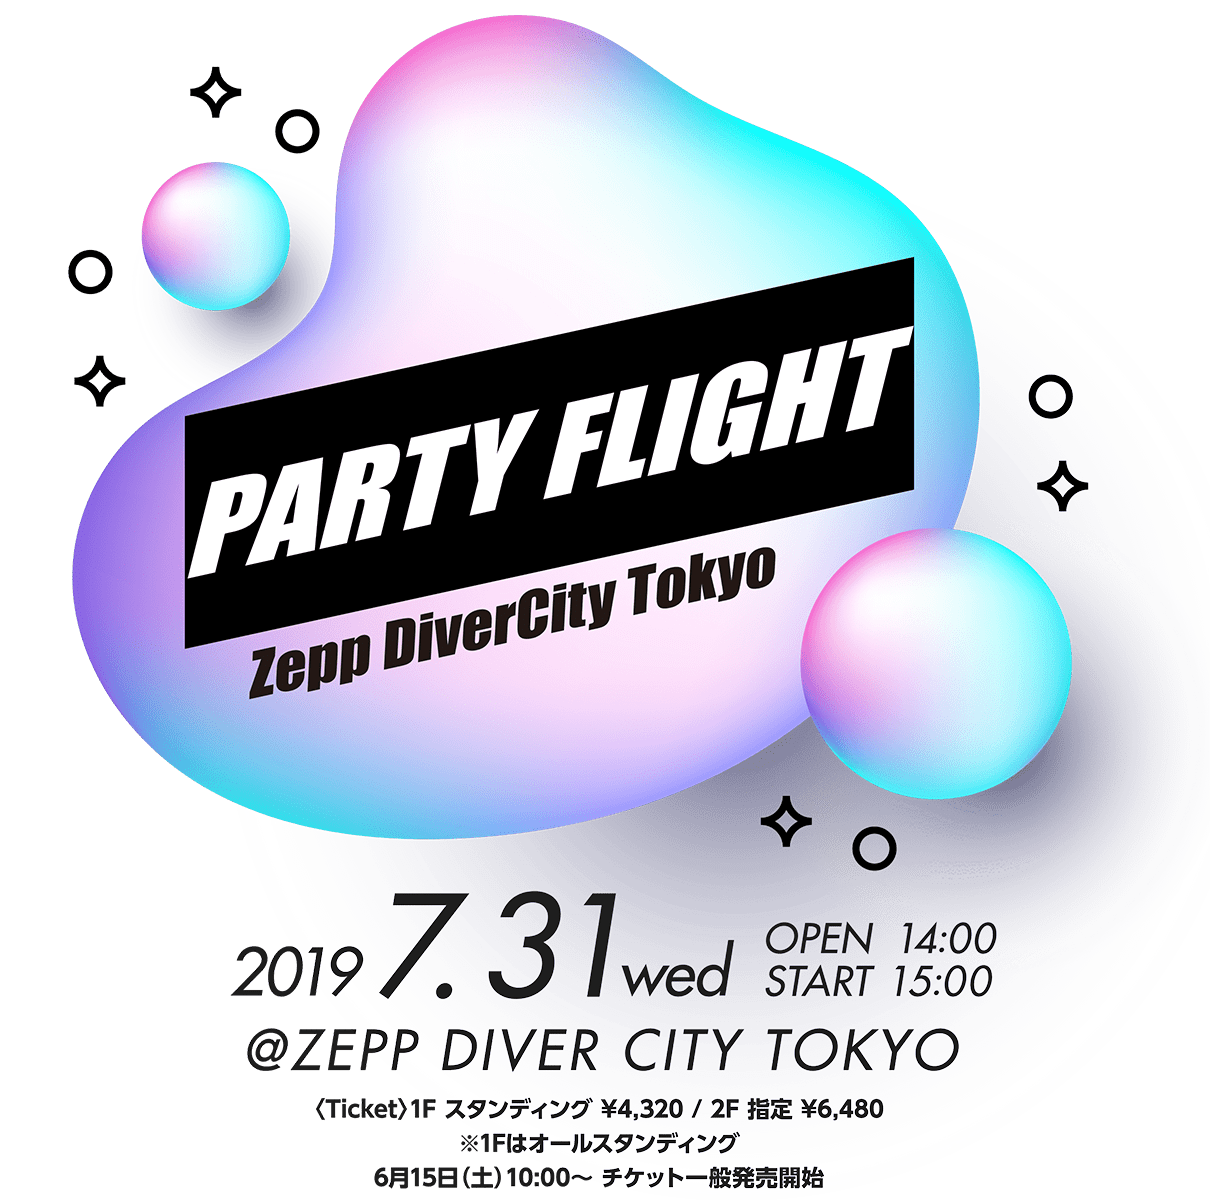 PartyFlight Zepp Divercity Tokyo